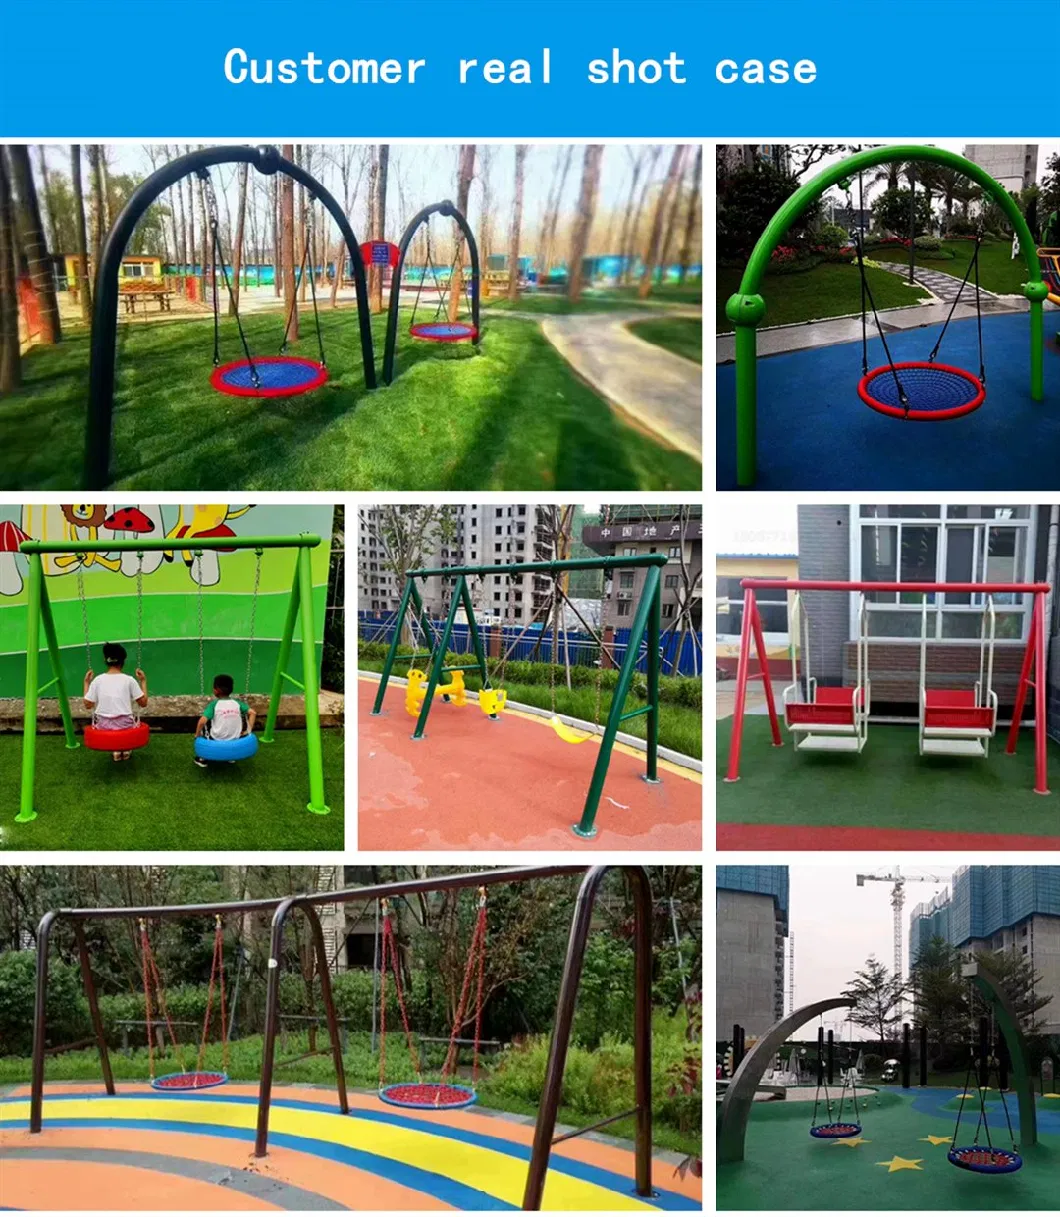 Community Outdoor Playground Kids Slide Climbing Frame Swing Set